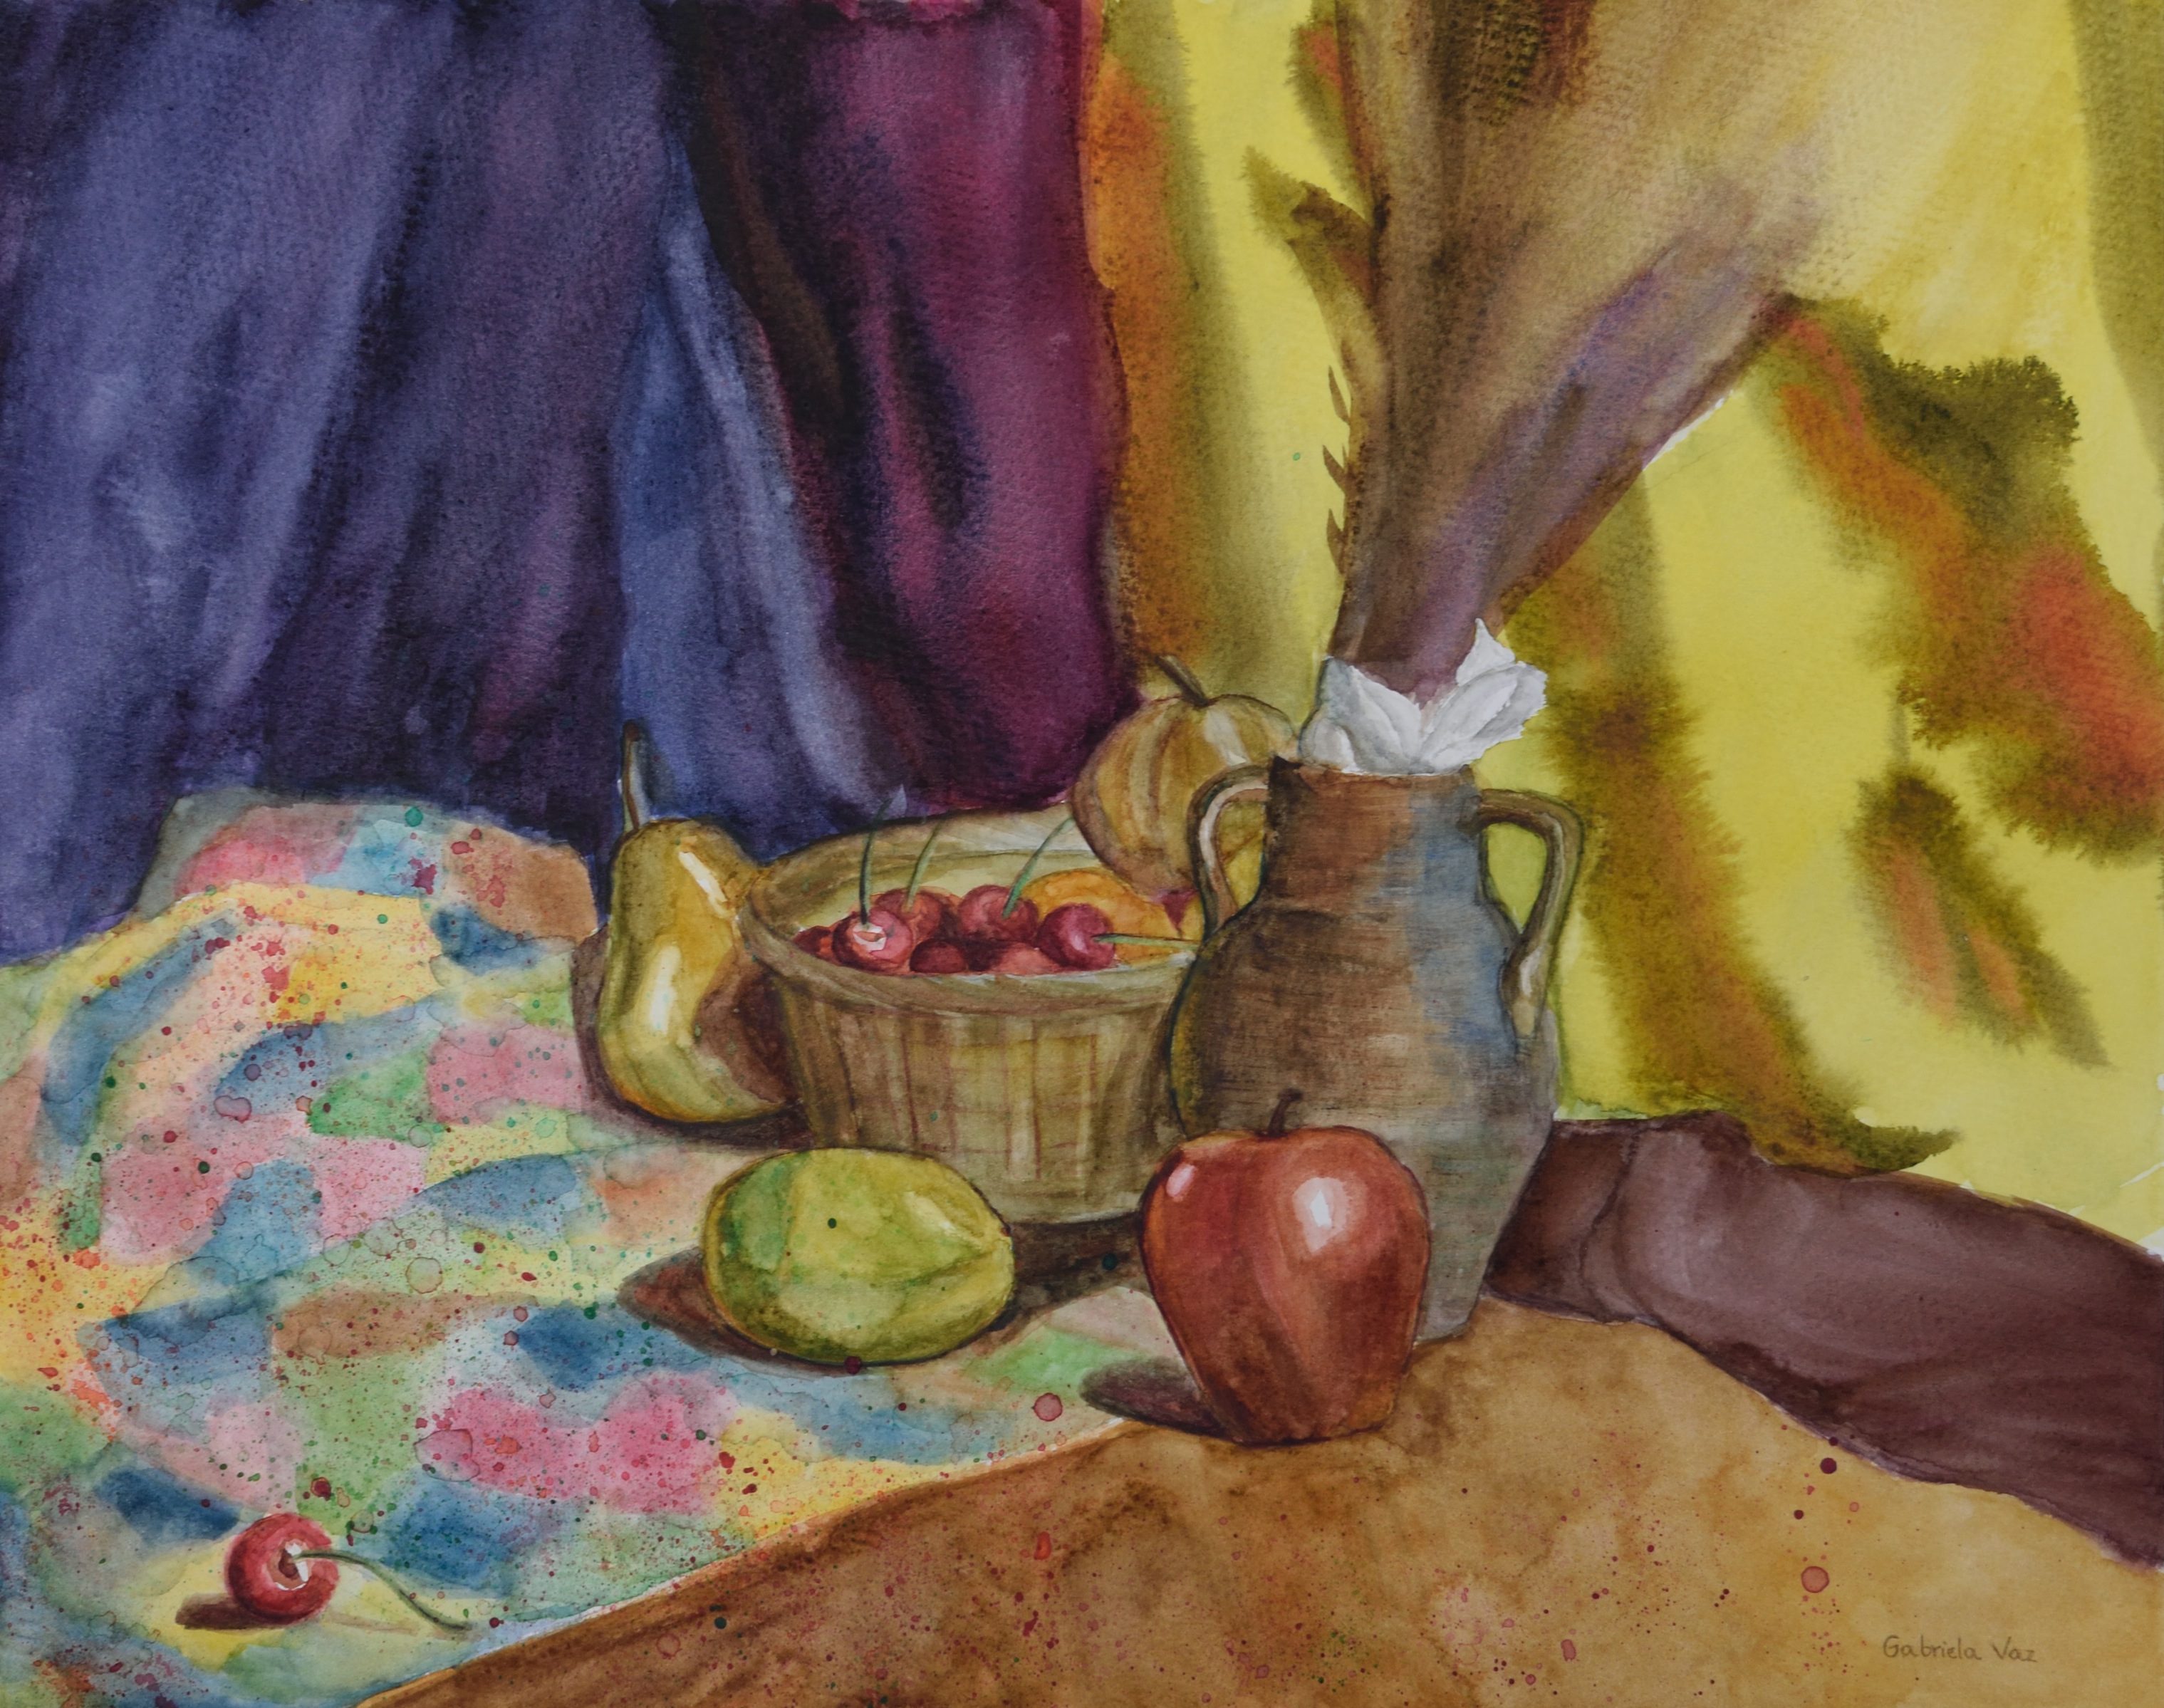 Basket of fruit, watercolor on paper, 40 x 50 cm, 2017